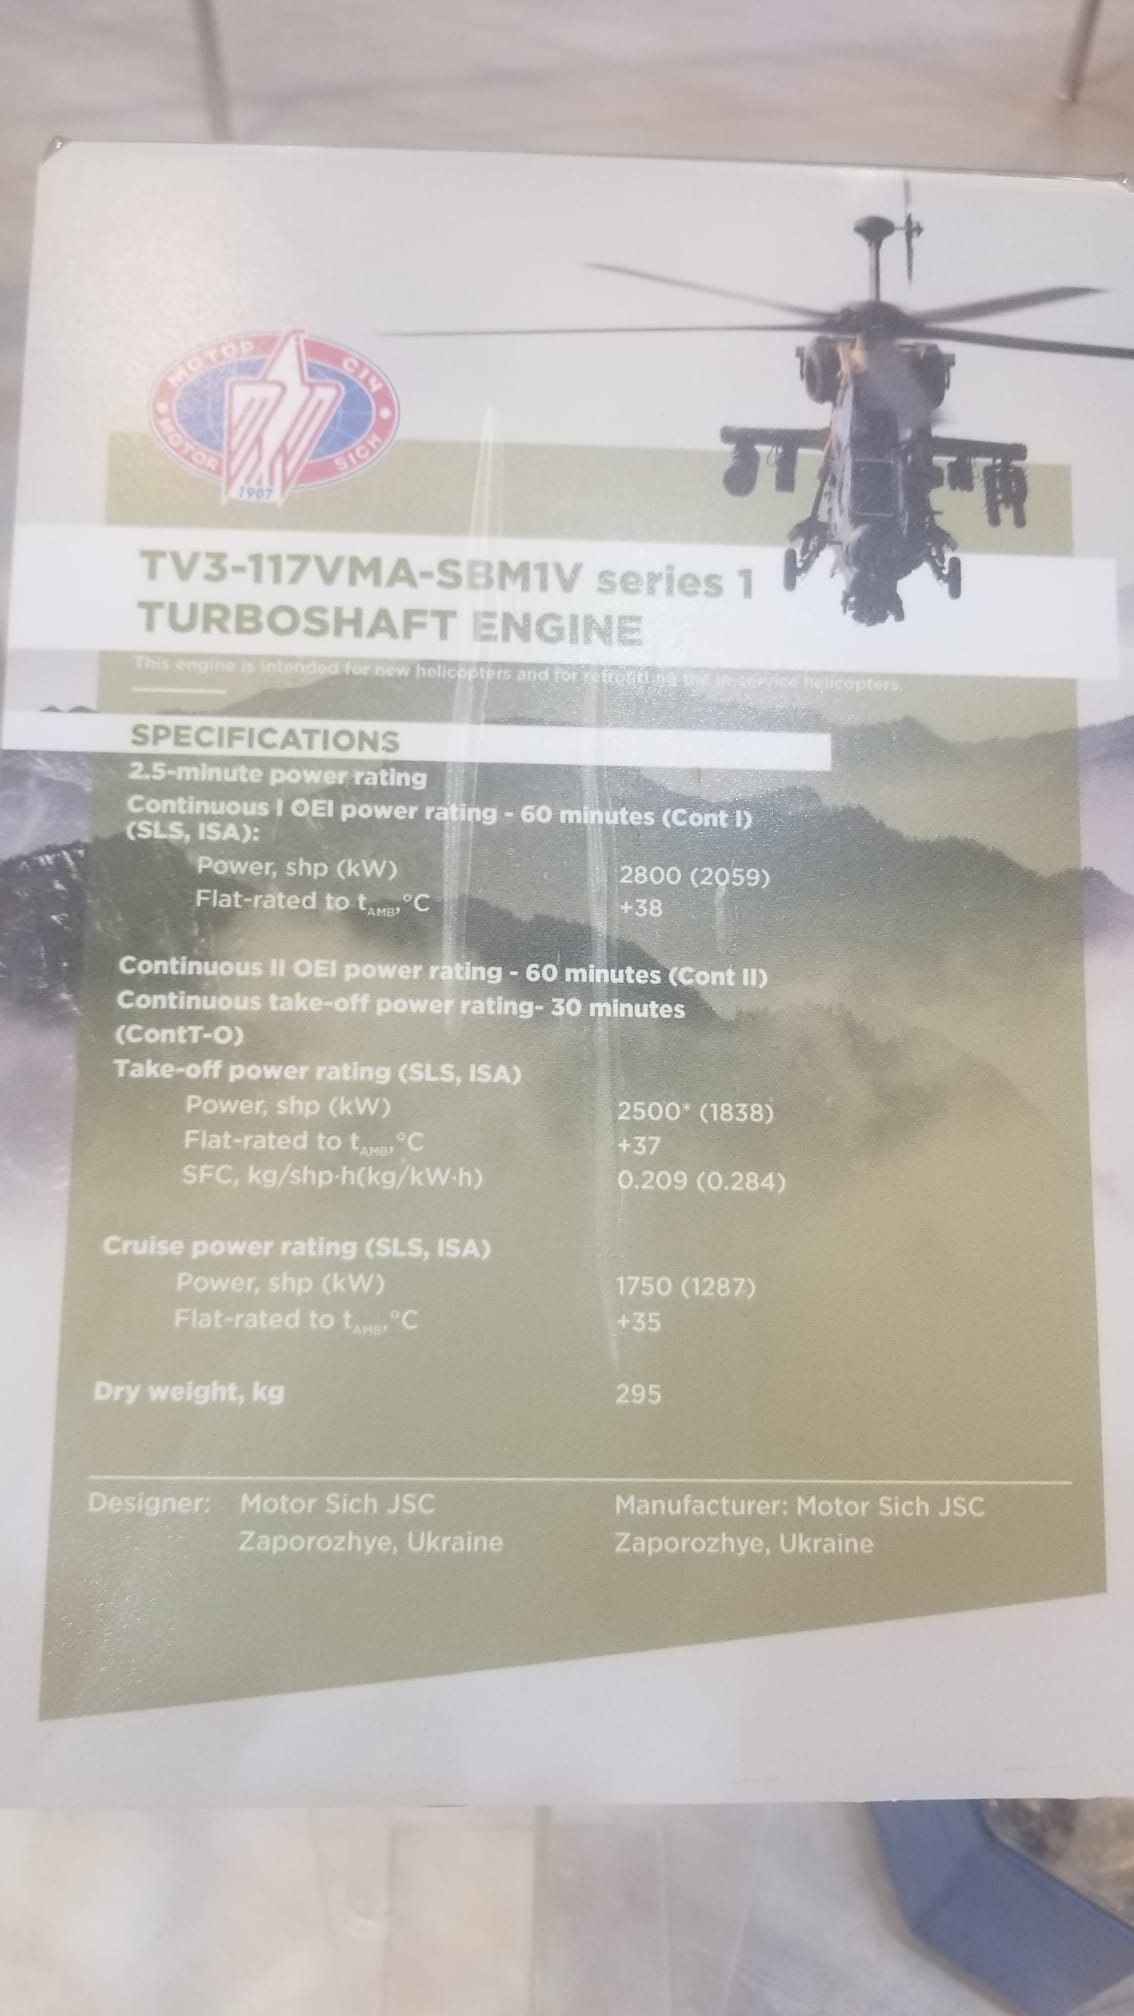 ATAK II’s Engine Displayed at TUSAŞ’s Stand